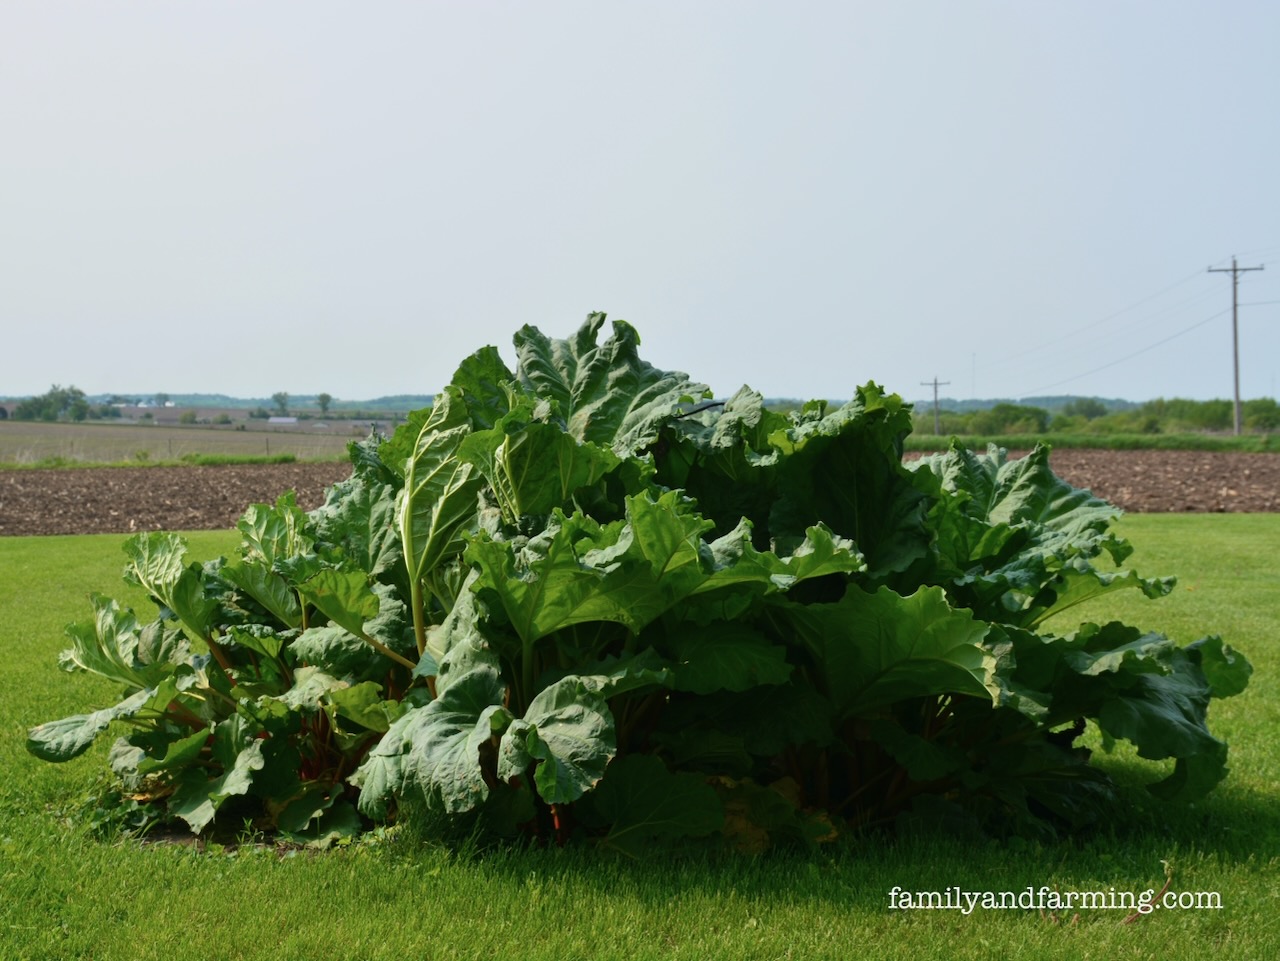 Rhubarb clump on an Iowa farm